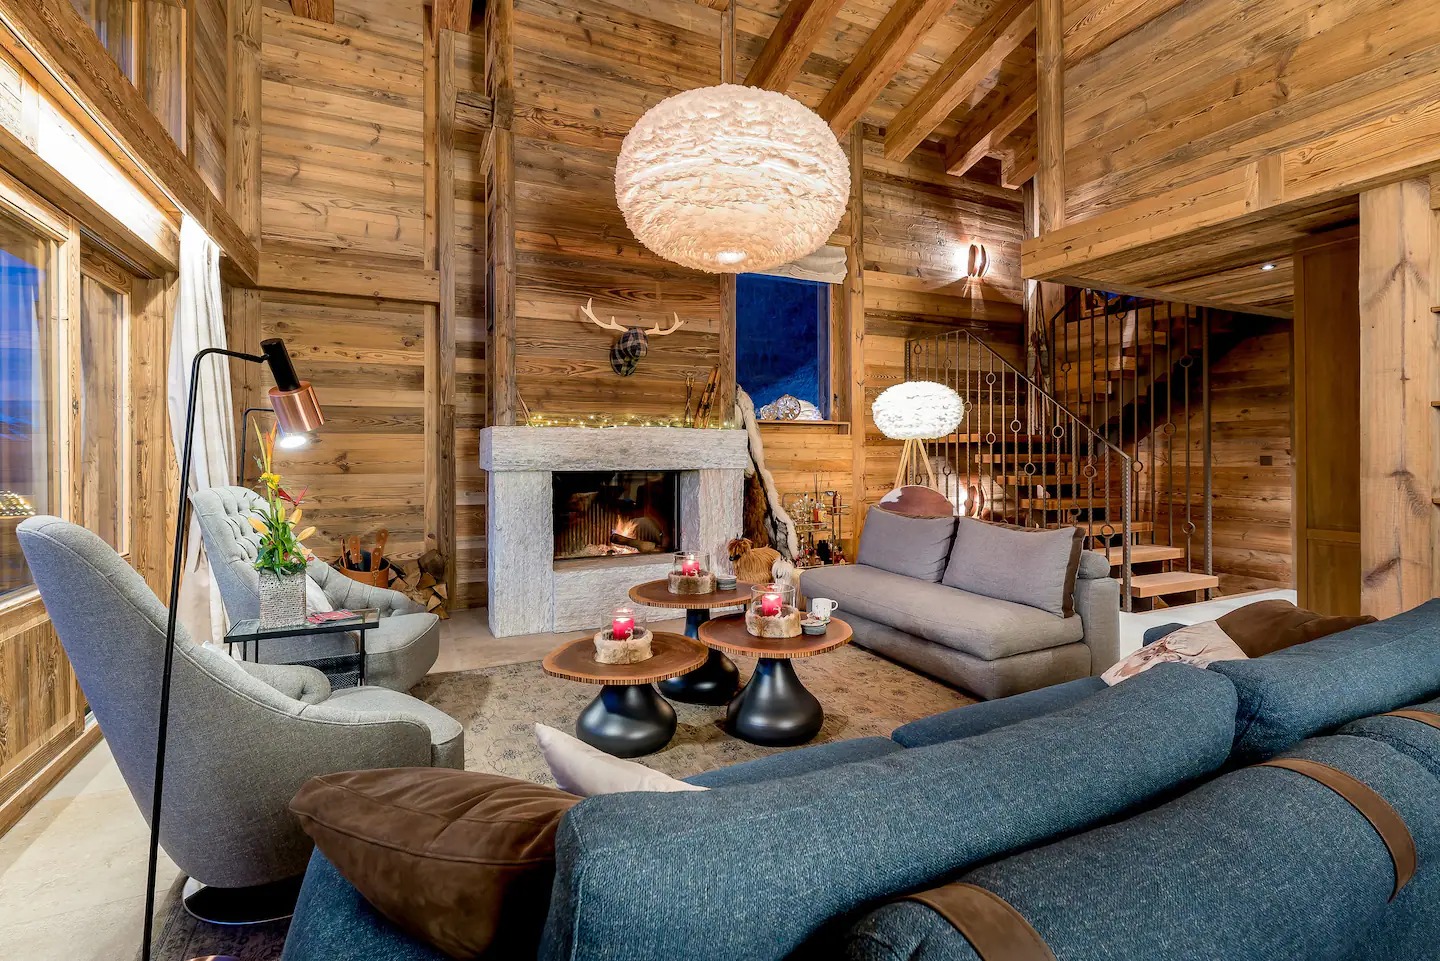 Meilleures locations Airbnb en Suisse